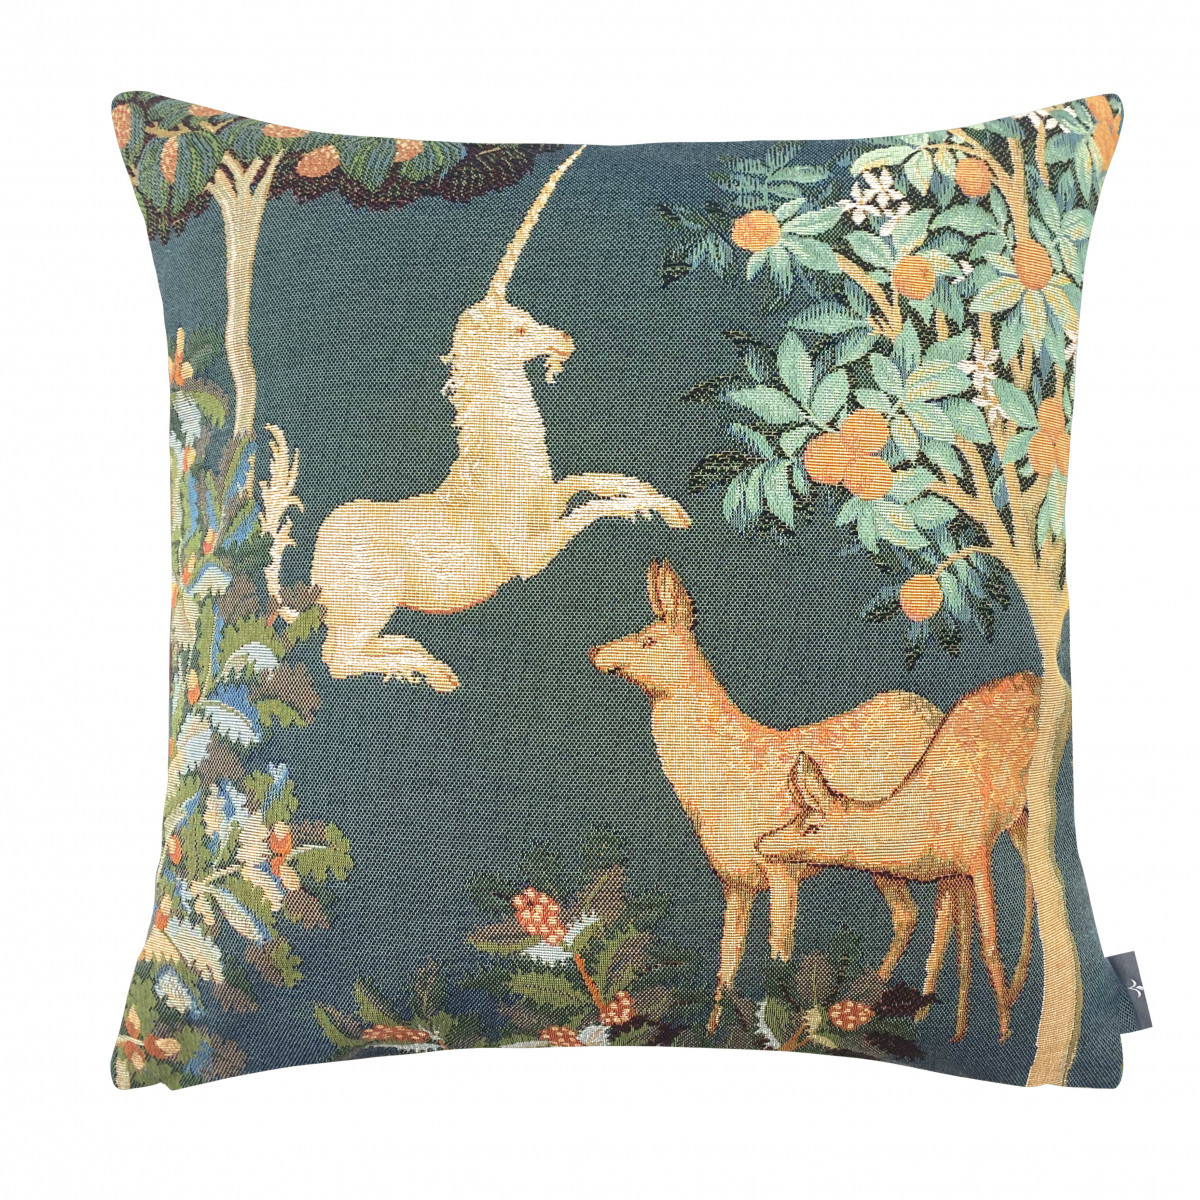 Art De Lys 50 x 50cm Blue Fantasy Forest Tapestry Cushion Cover